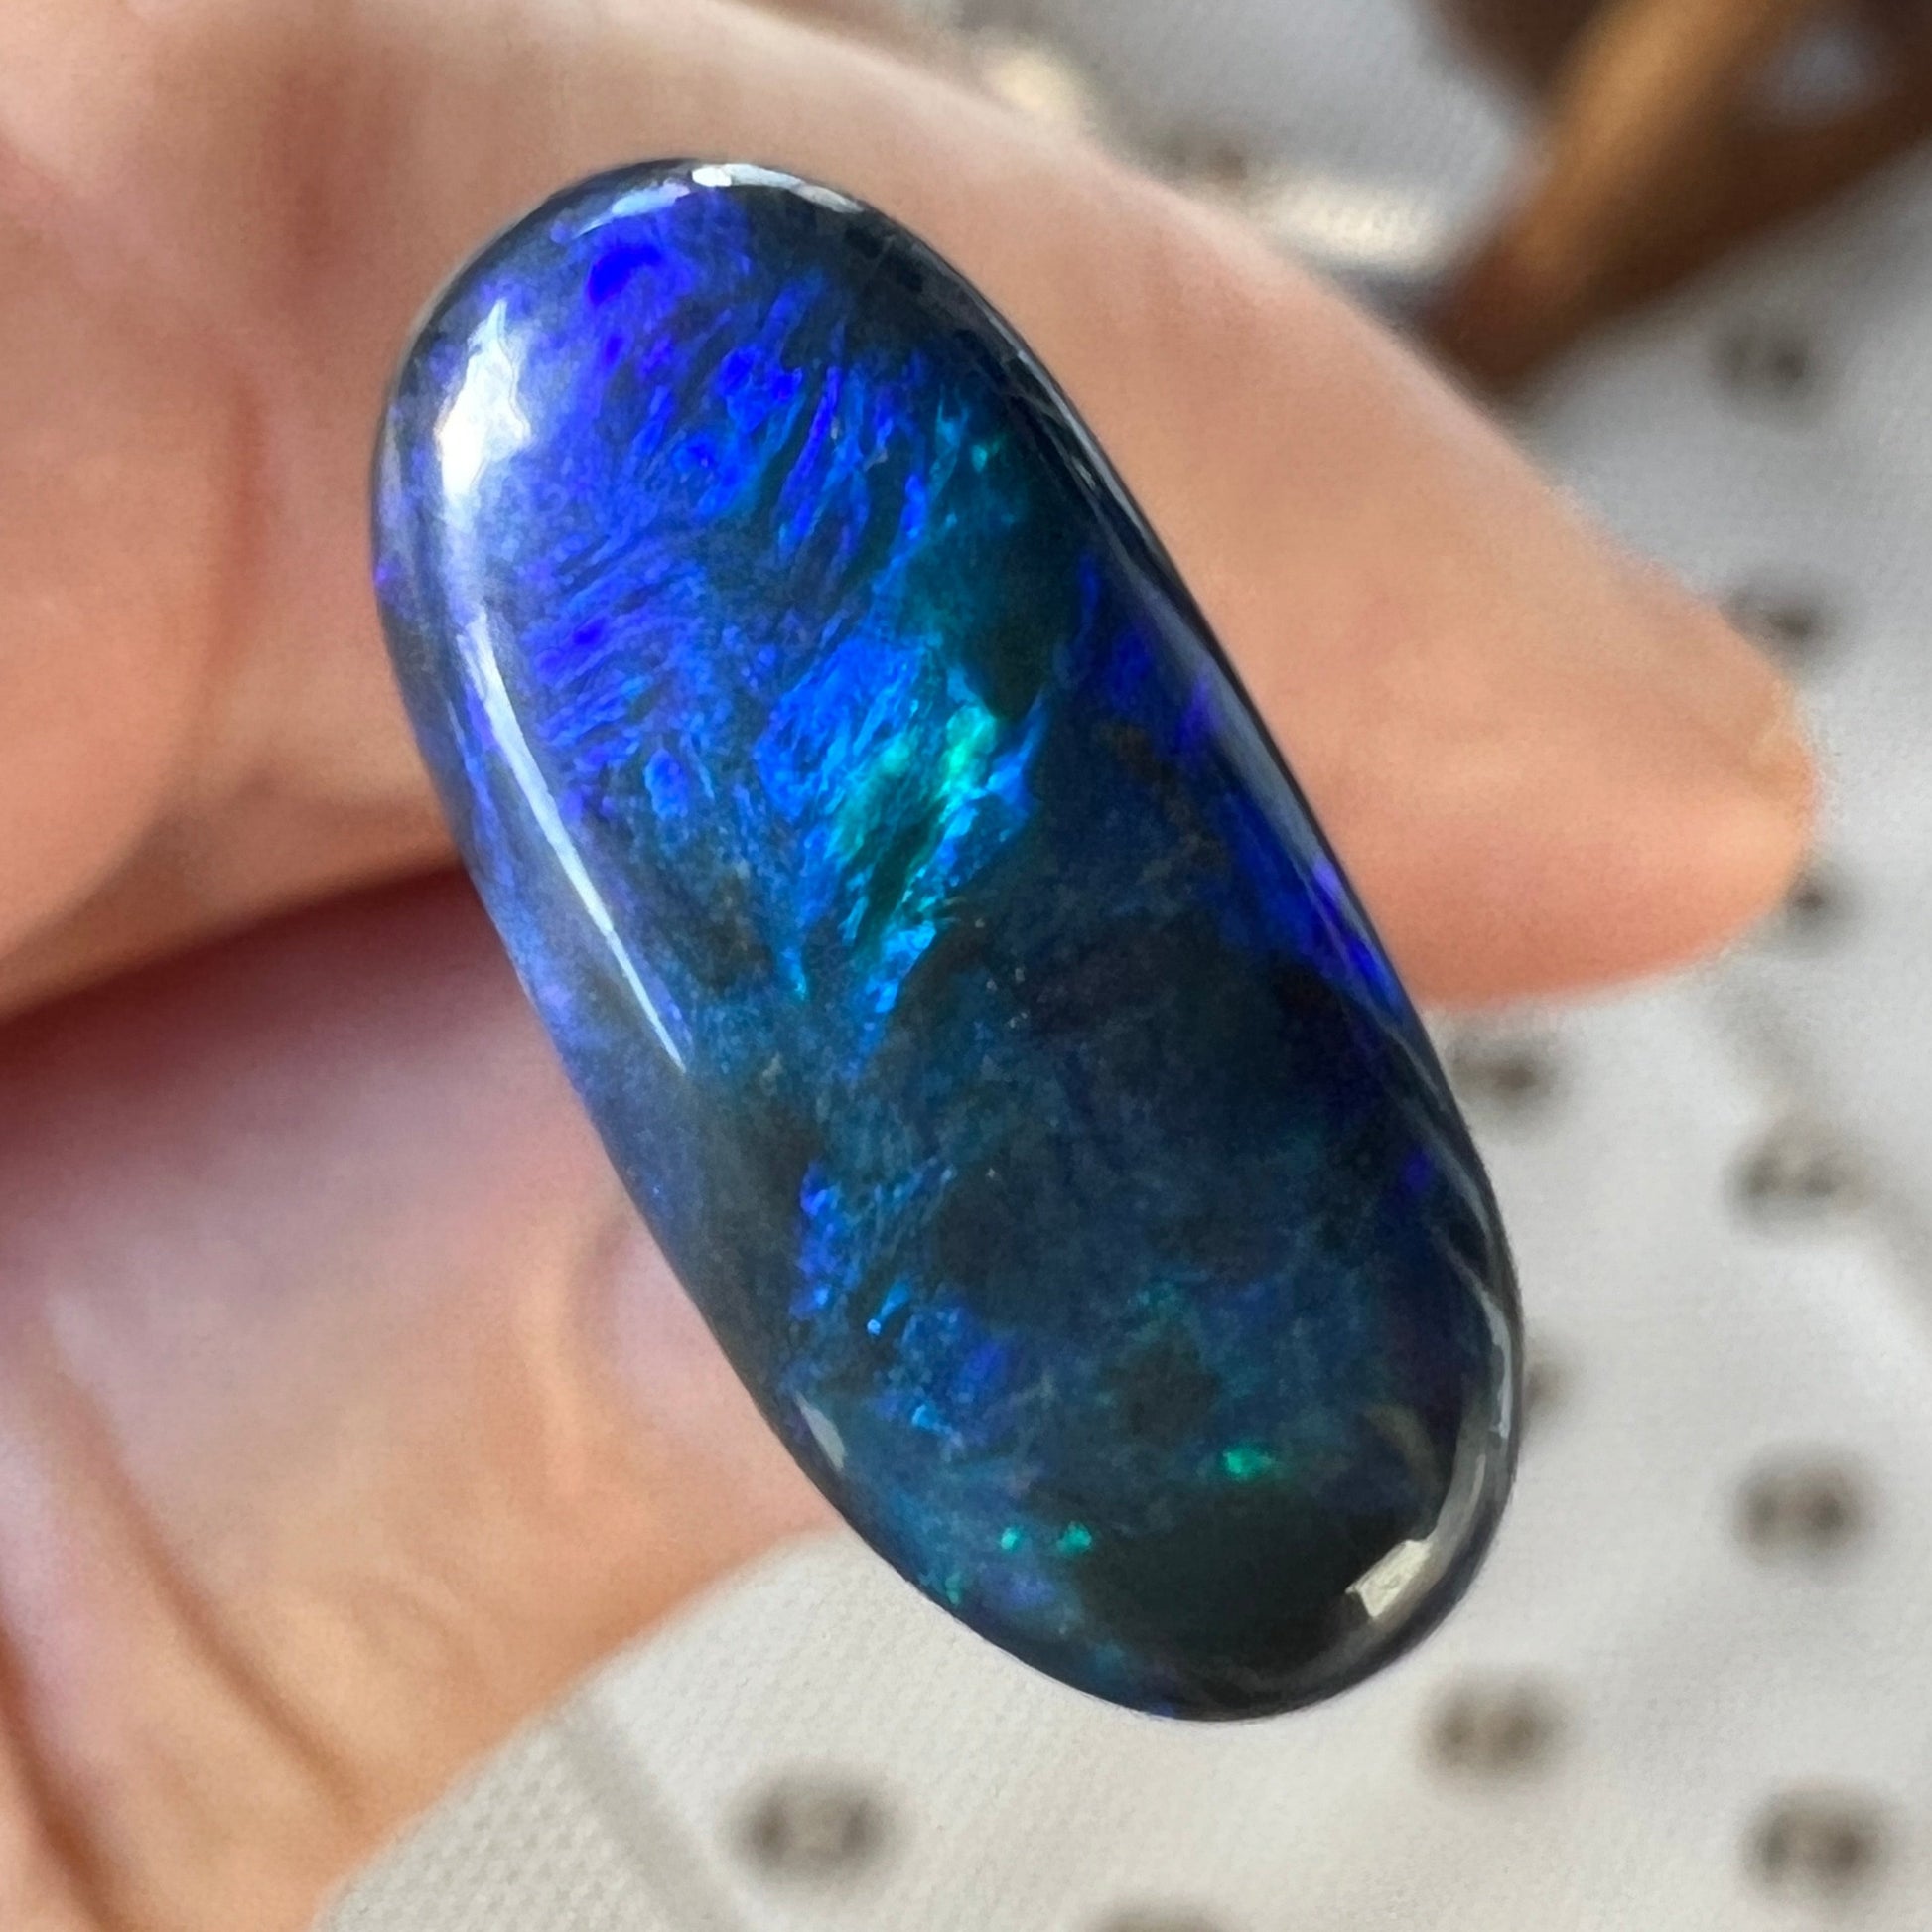 Lightning Ridge black opal displaying beautiful blues. Ready for setting.